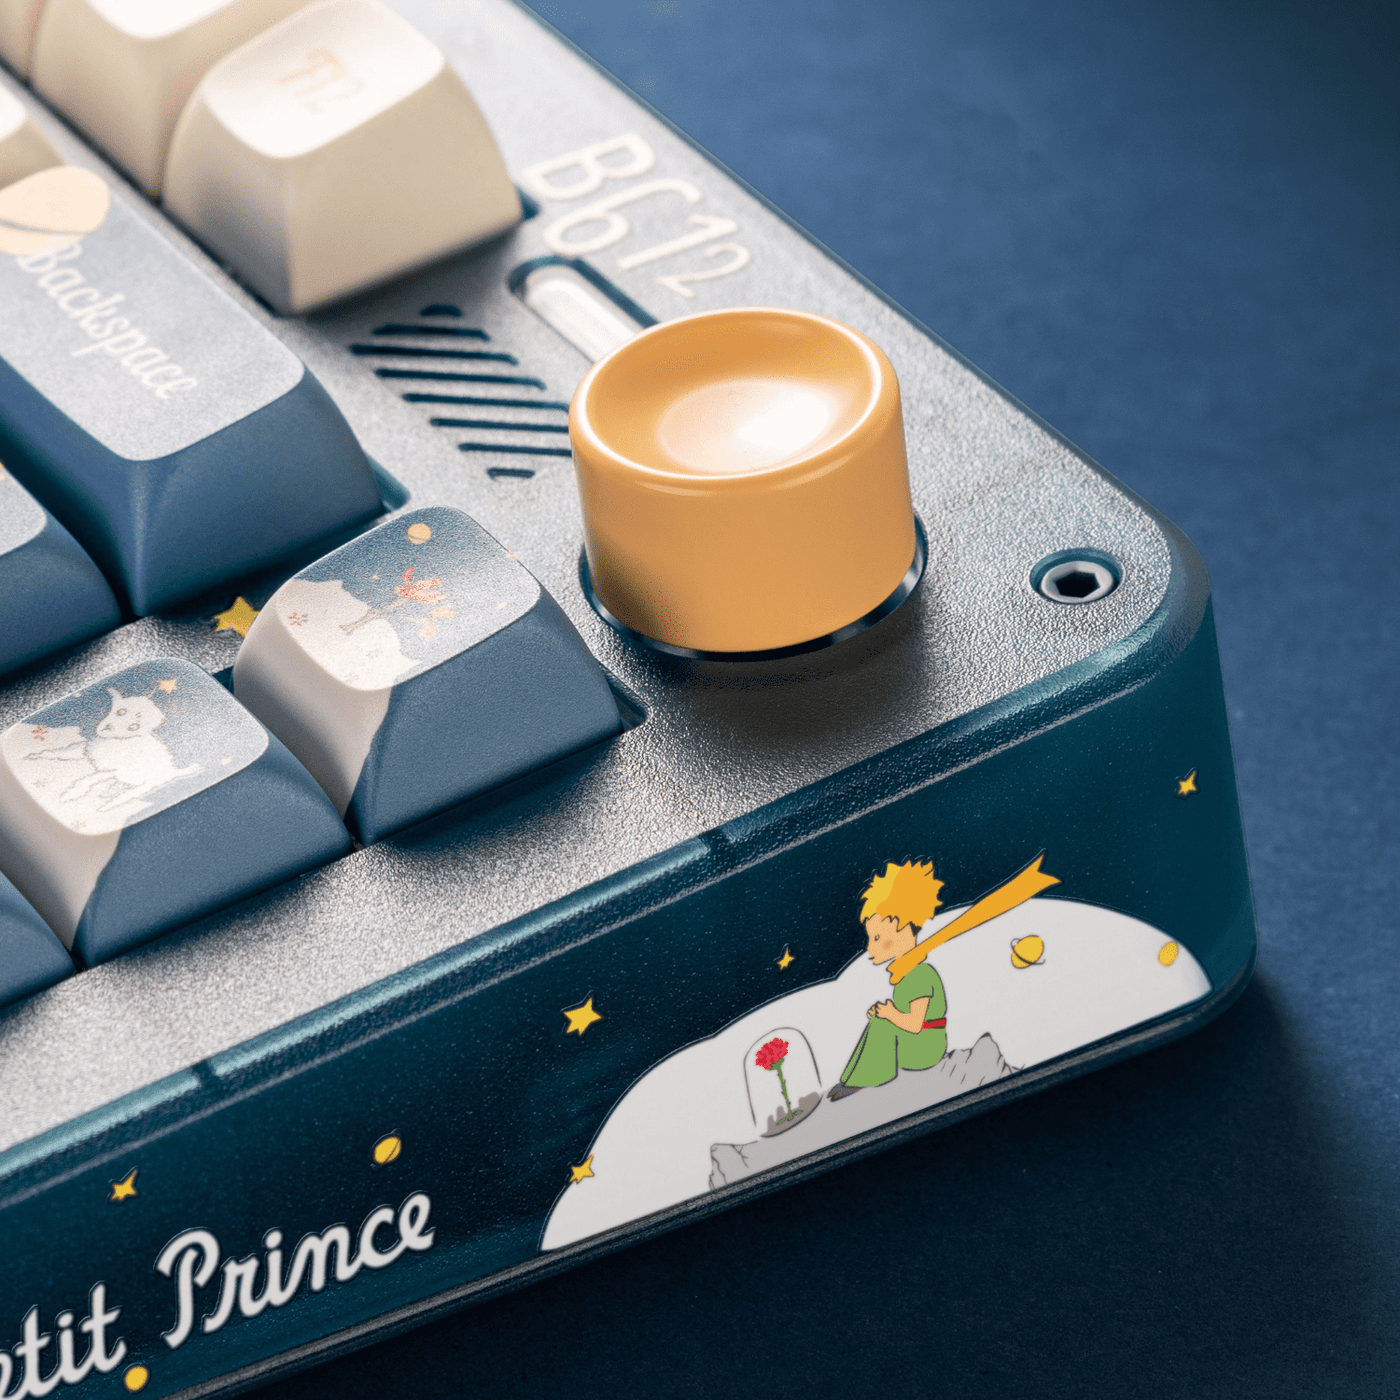 IQUNIX x Little Prince ZX75 Sky Encounter Mechanical Keyboard